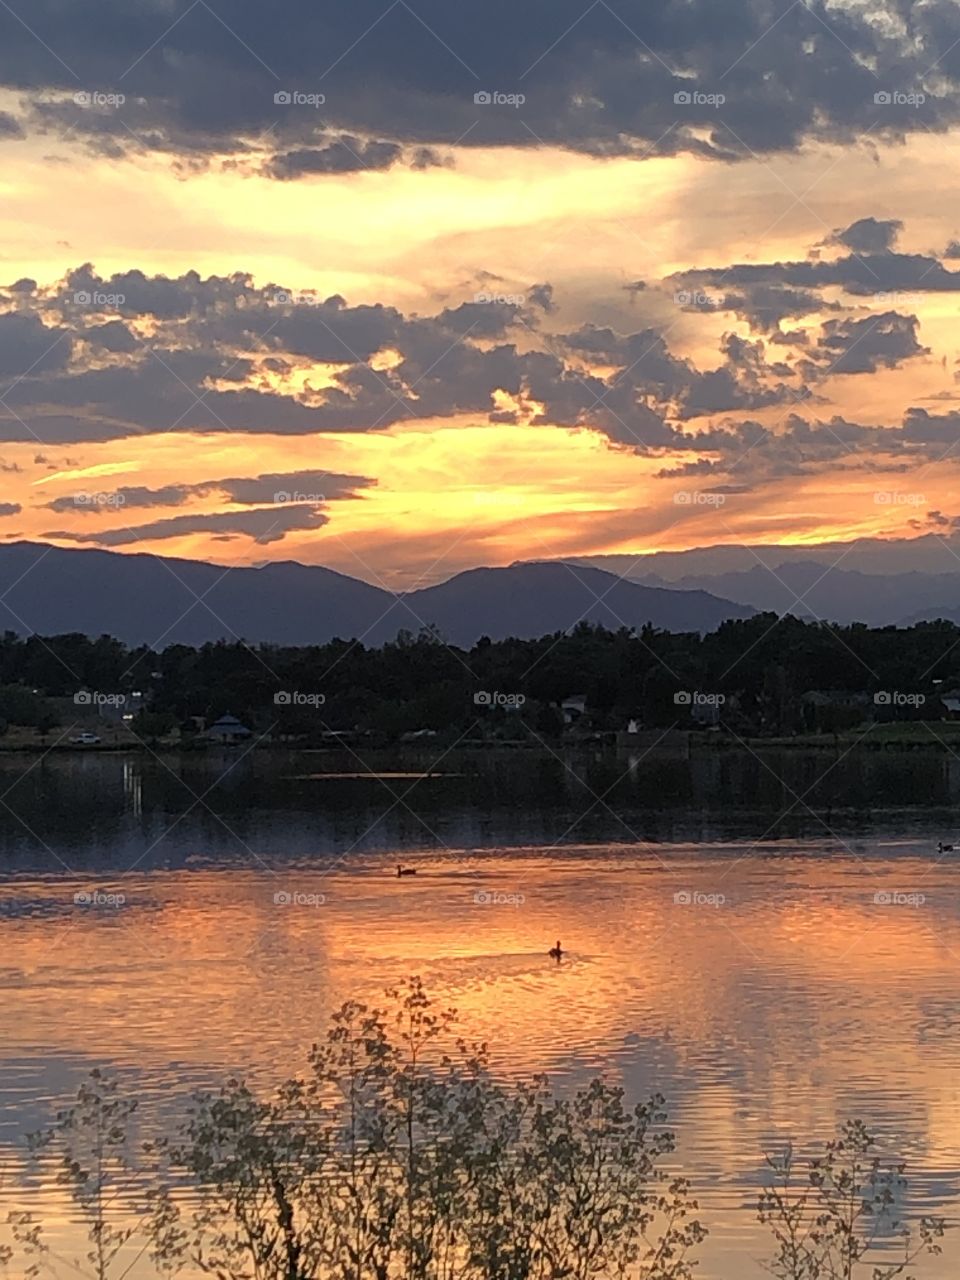 Orange sunset reflection on Lake with mts. In background.